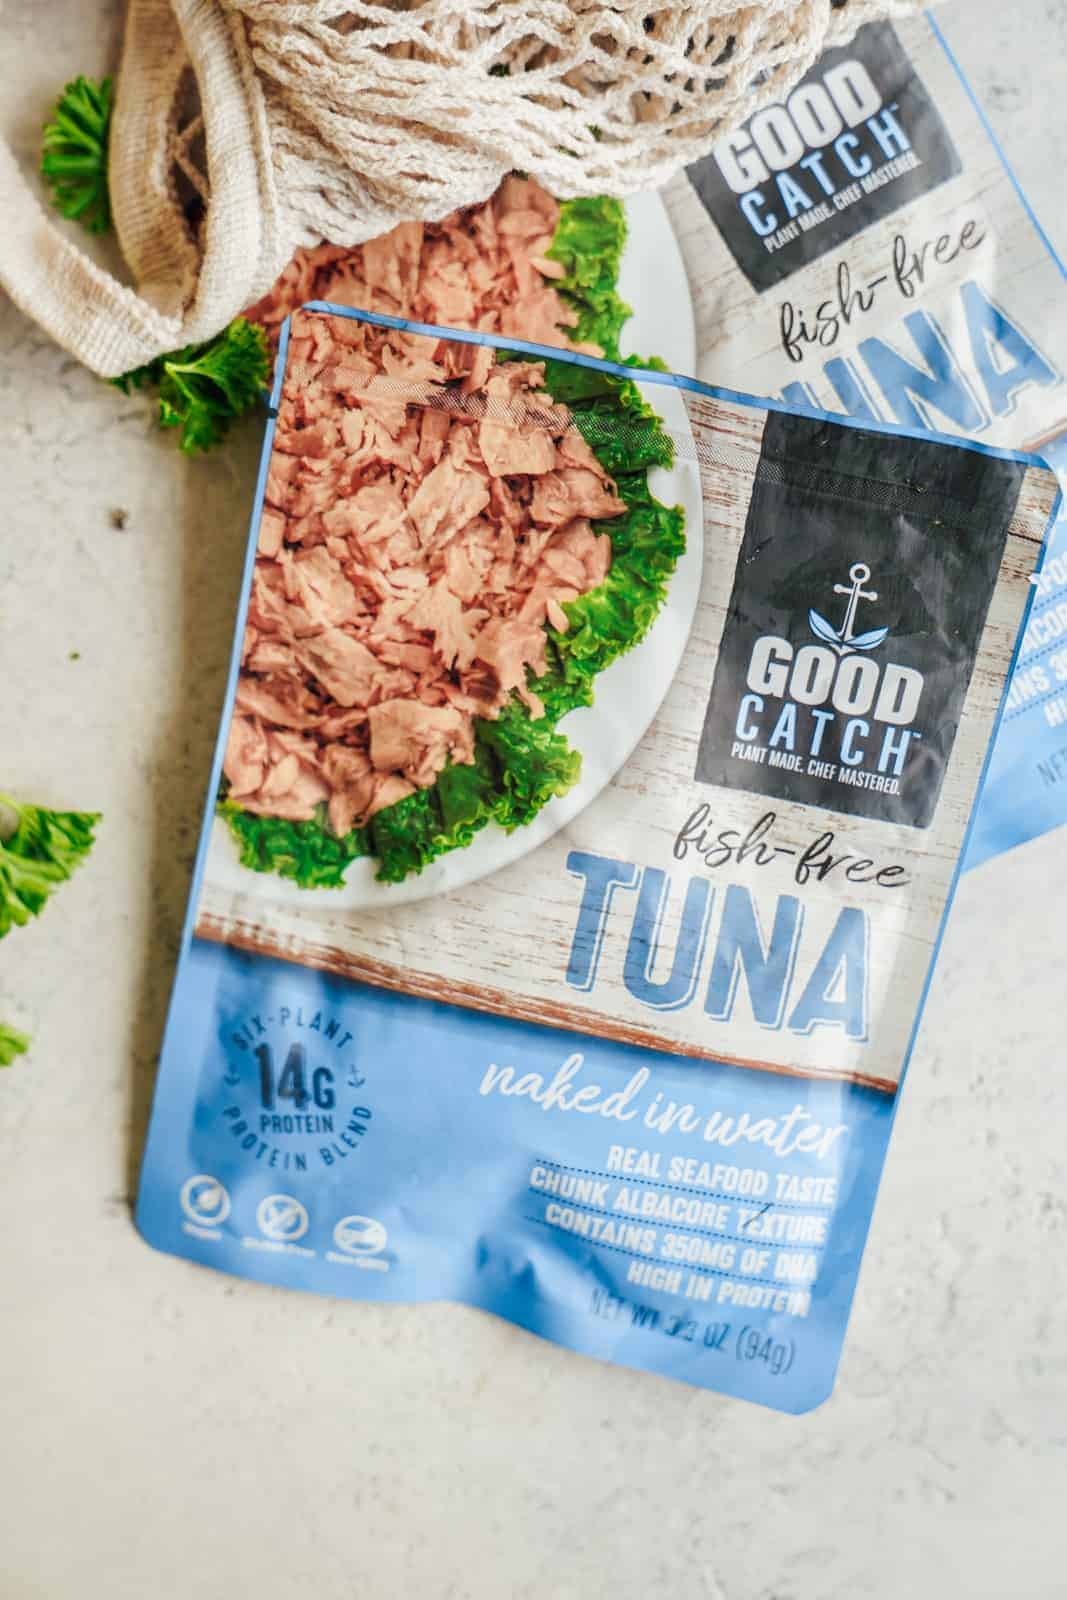 Good Catch Food vegan tuna on countertop.